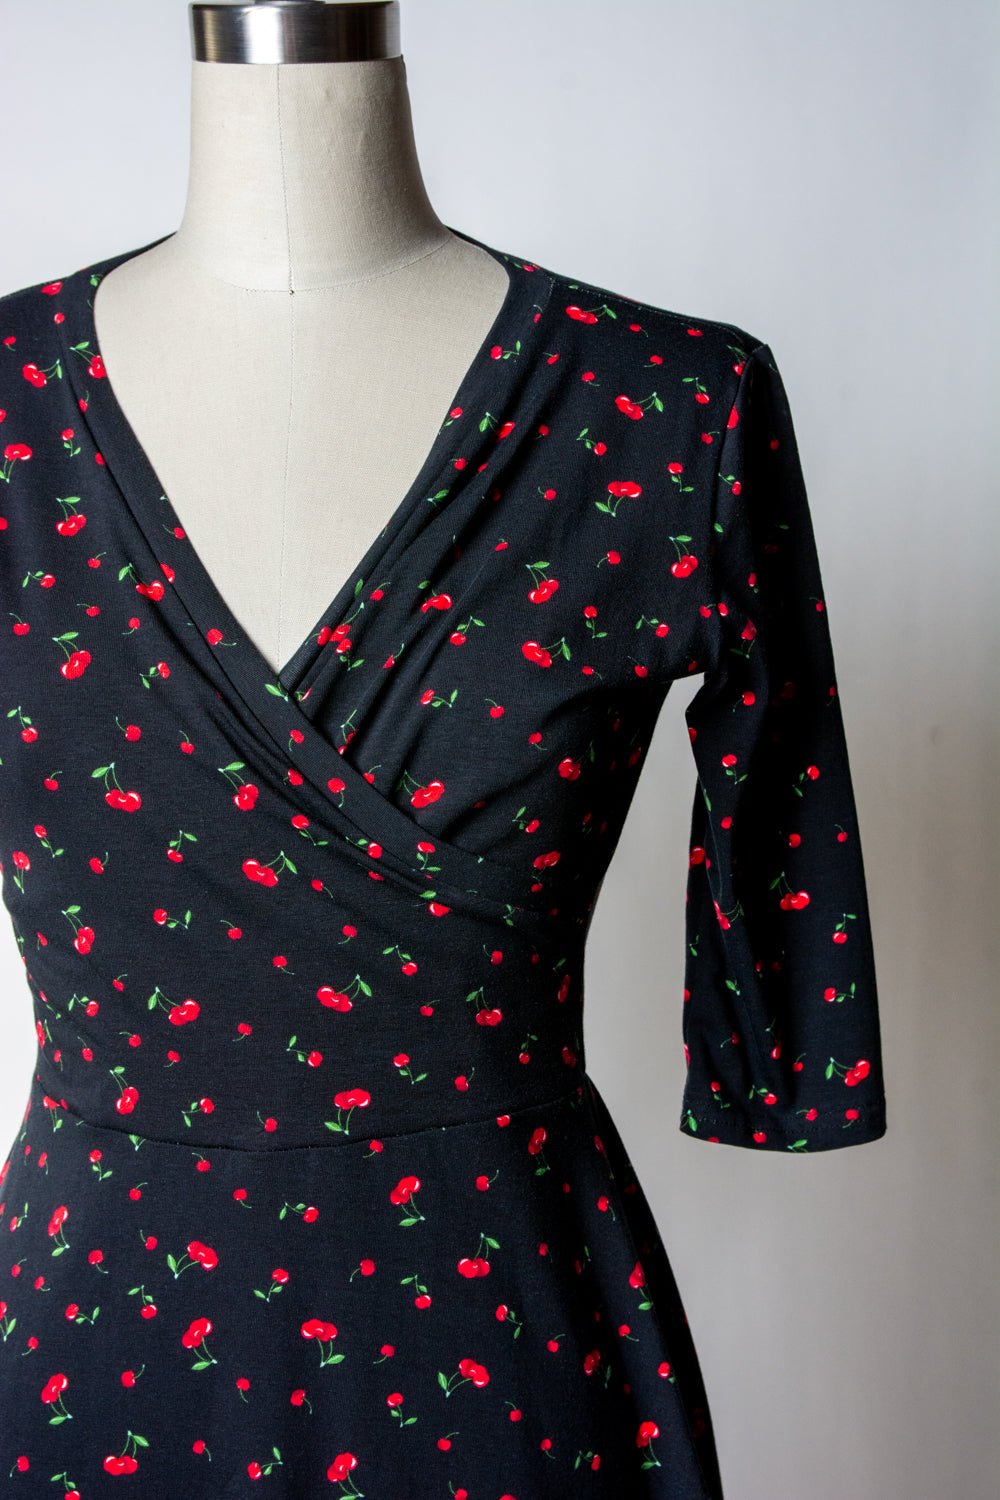 Joanie Knit Dress 3/4 Sleeve - Cherries